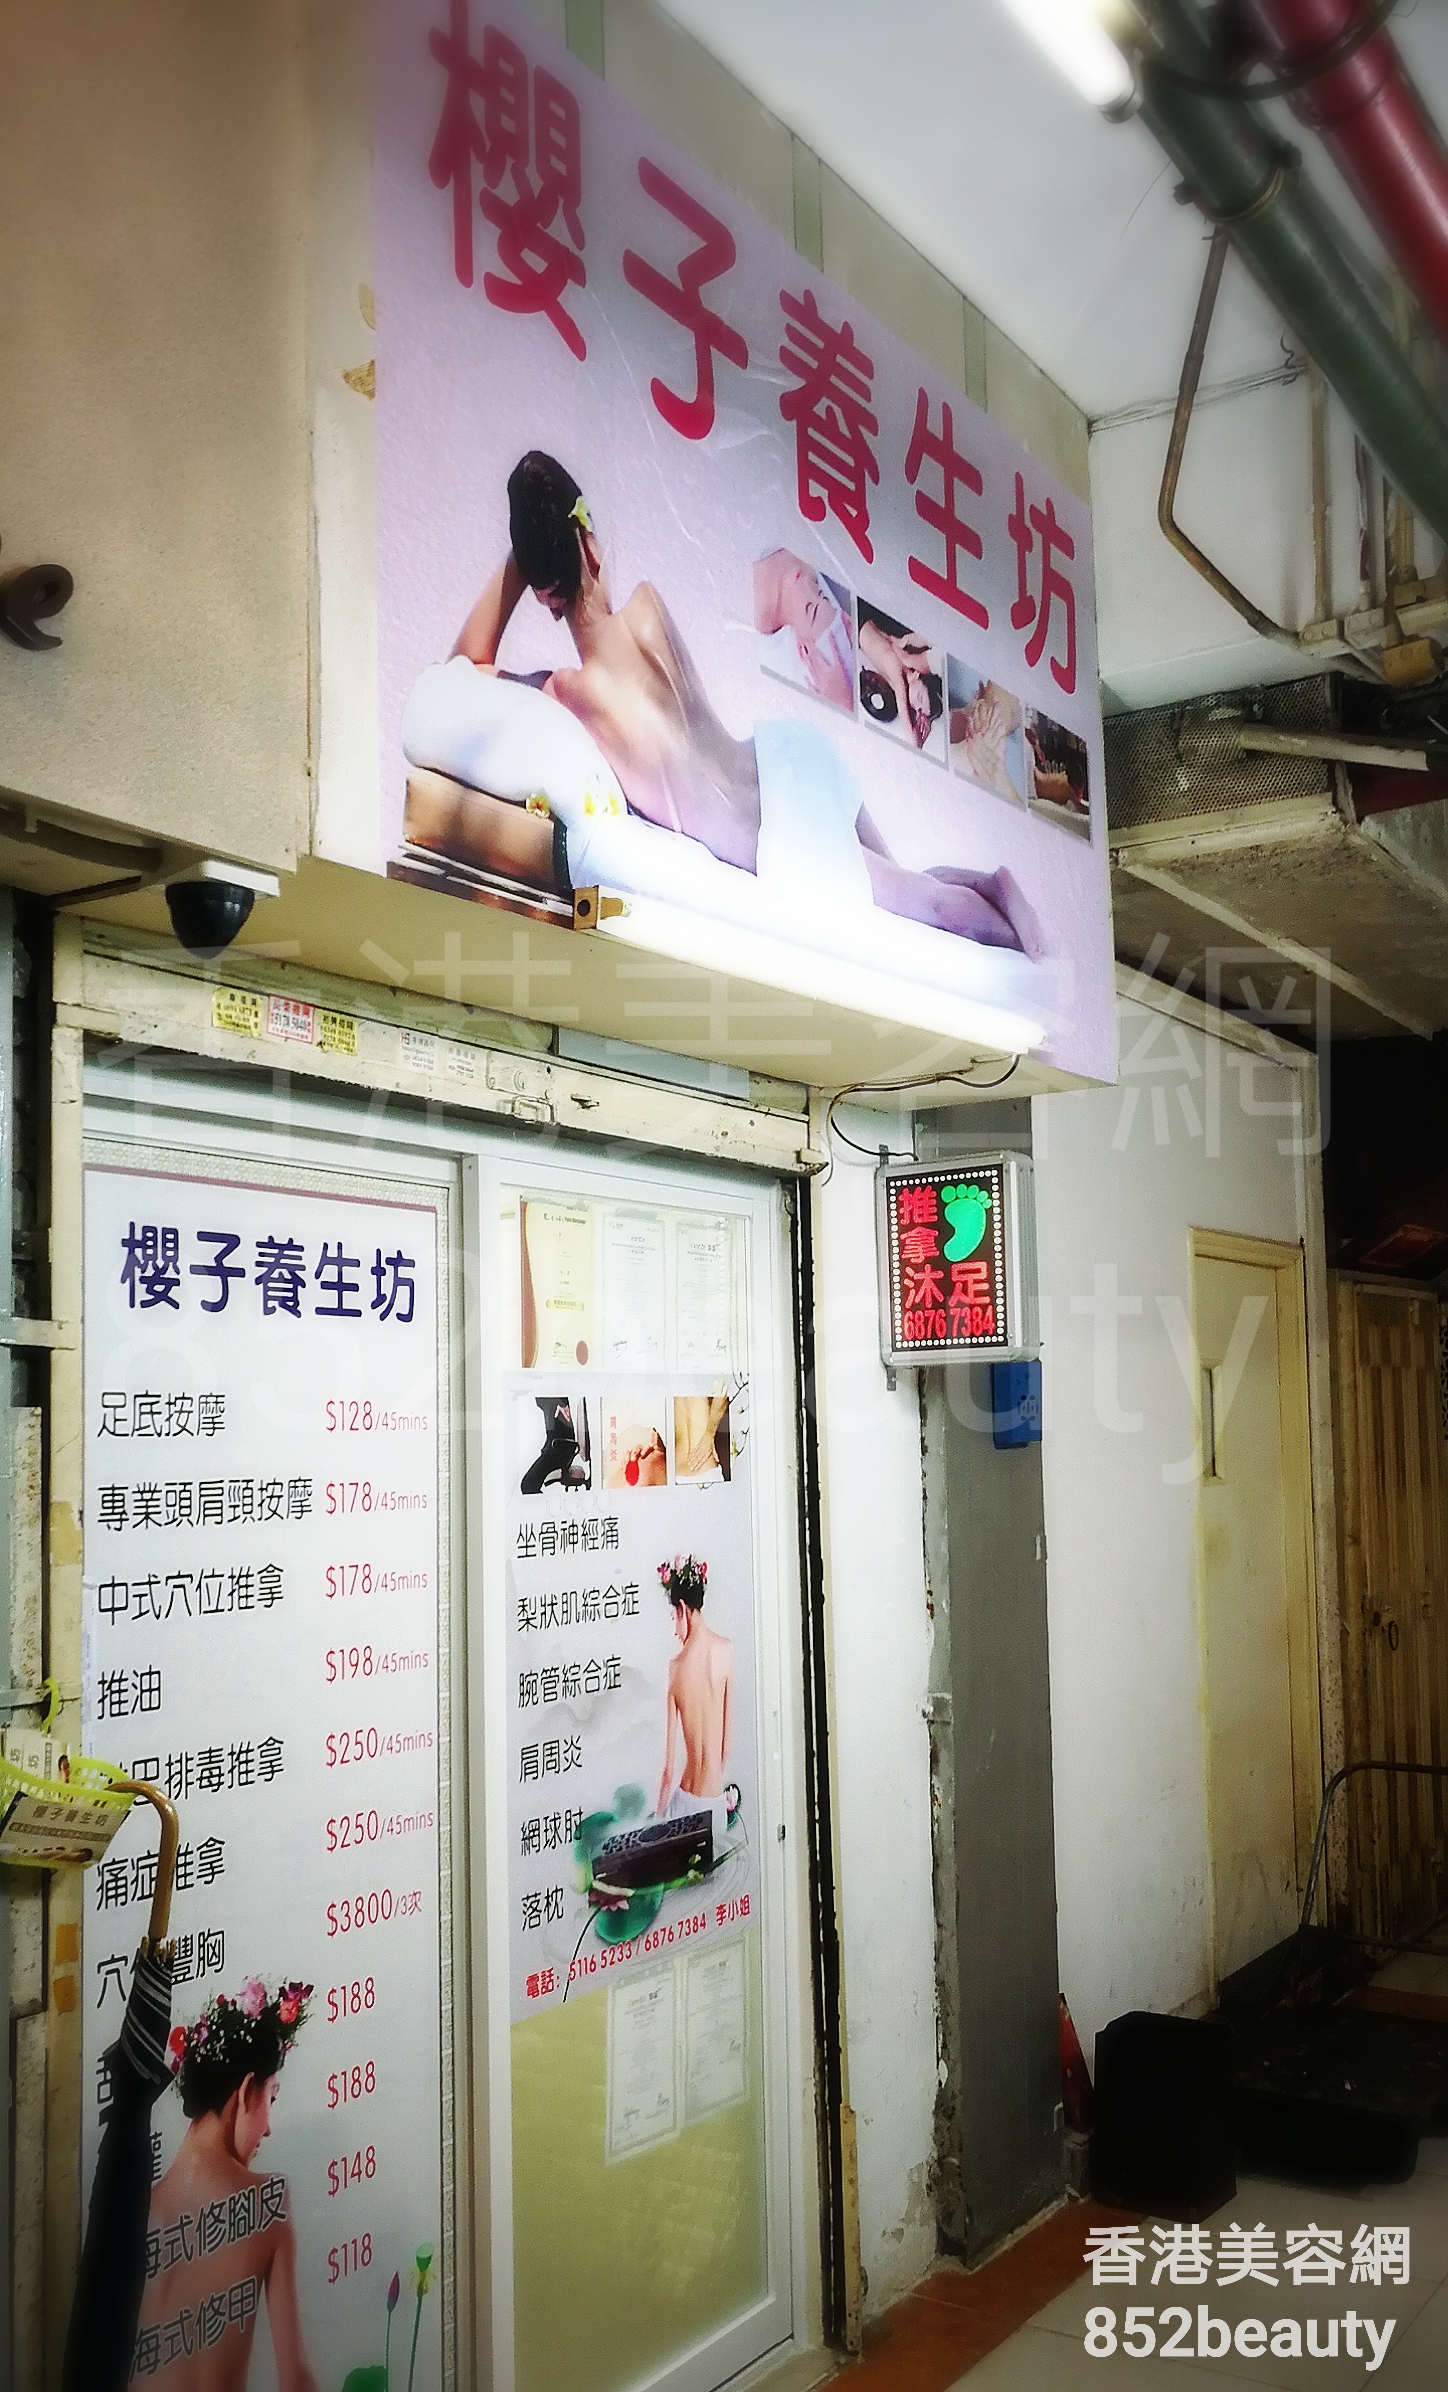 Beauty Salon / Beautician good rated 櫻子養生坊 @ Hong Kong Beauty Salon Hong Kong Beauty Salon